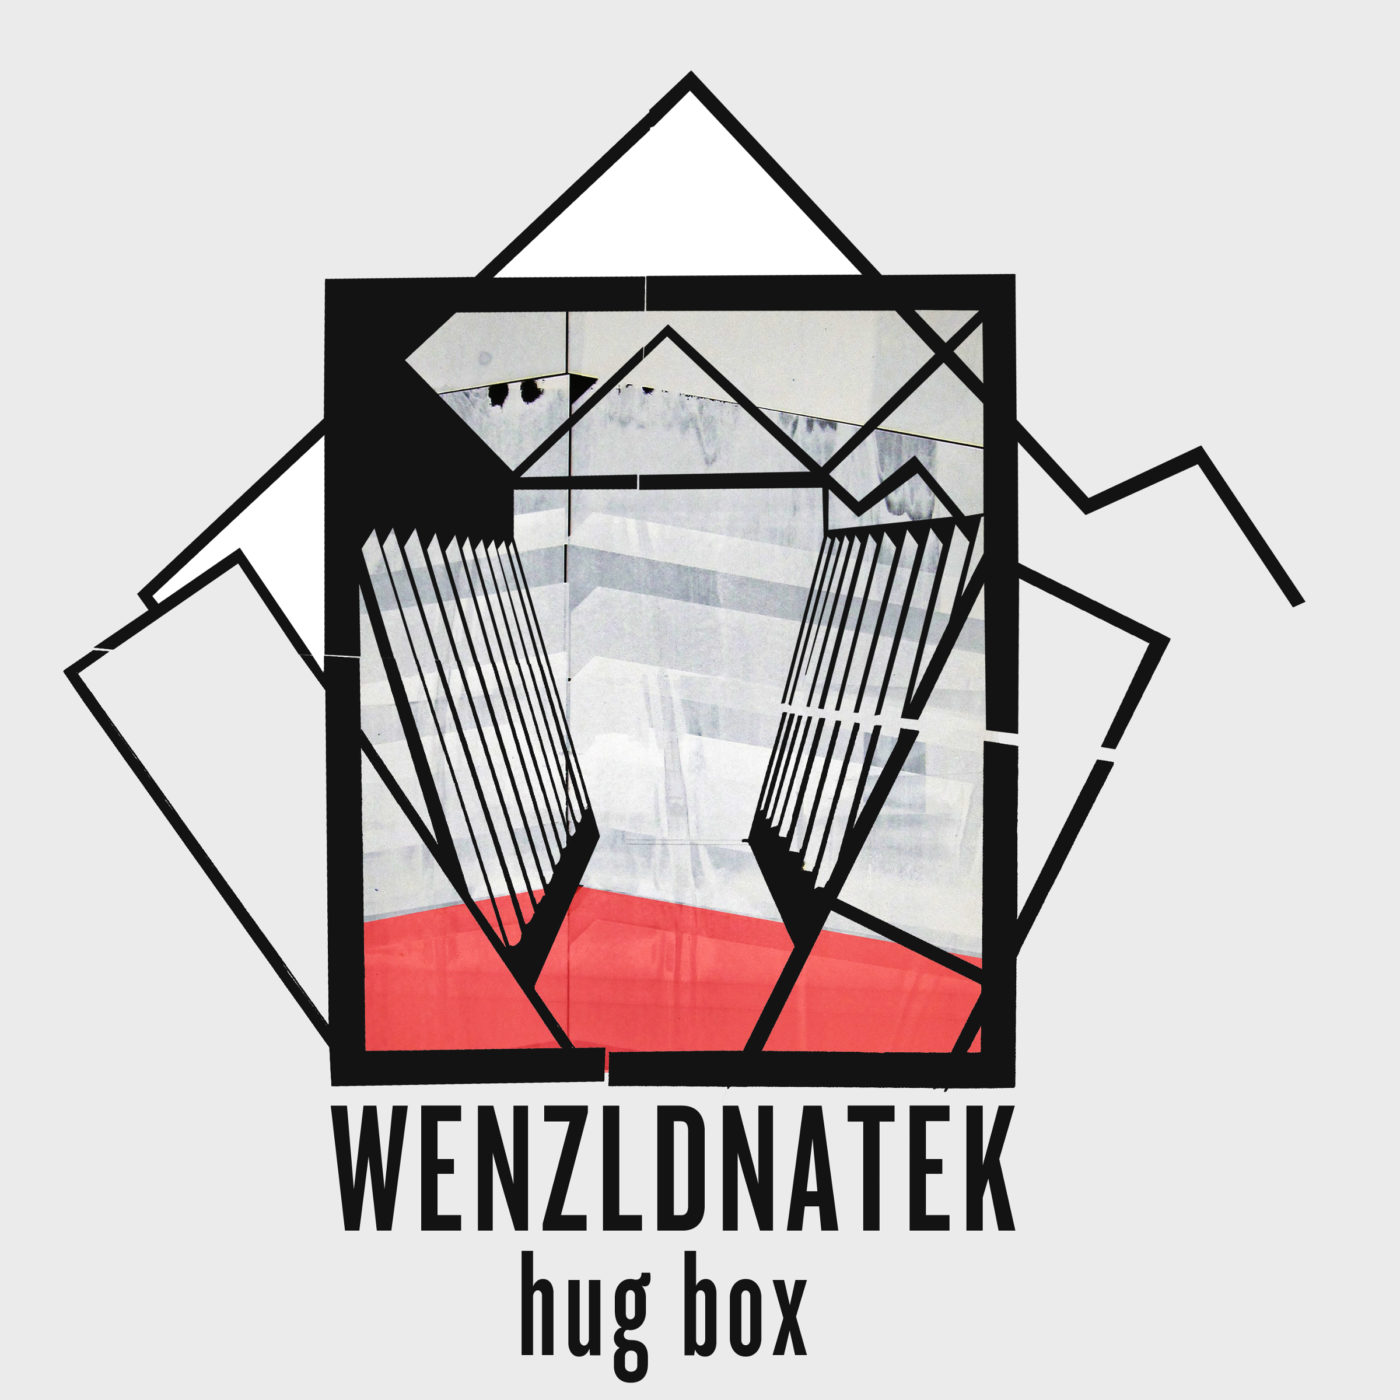 Wenzl Dnatek – hug box